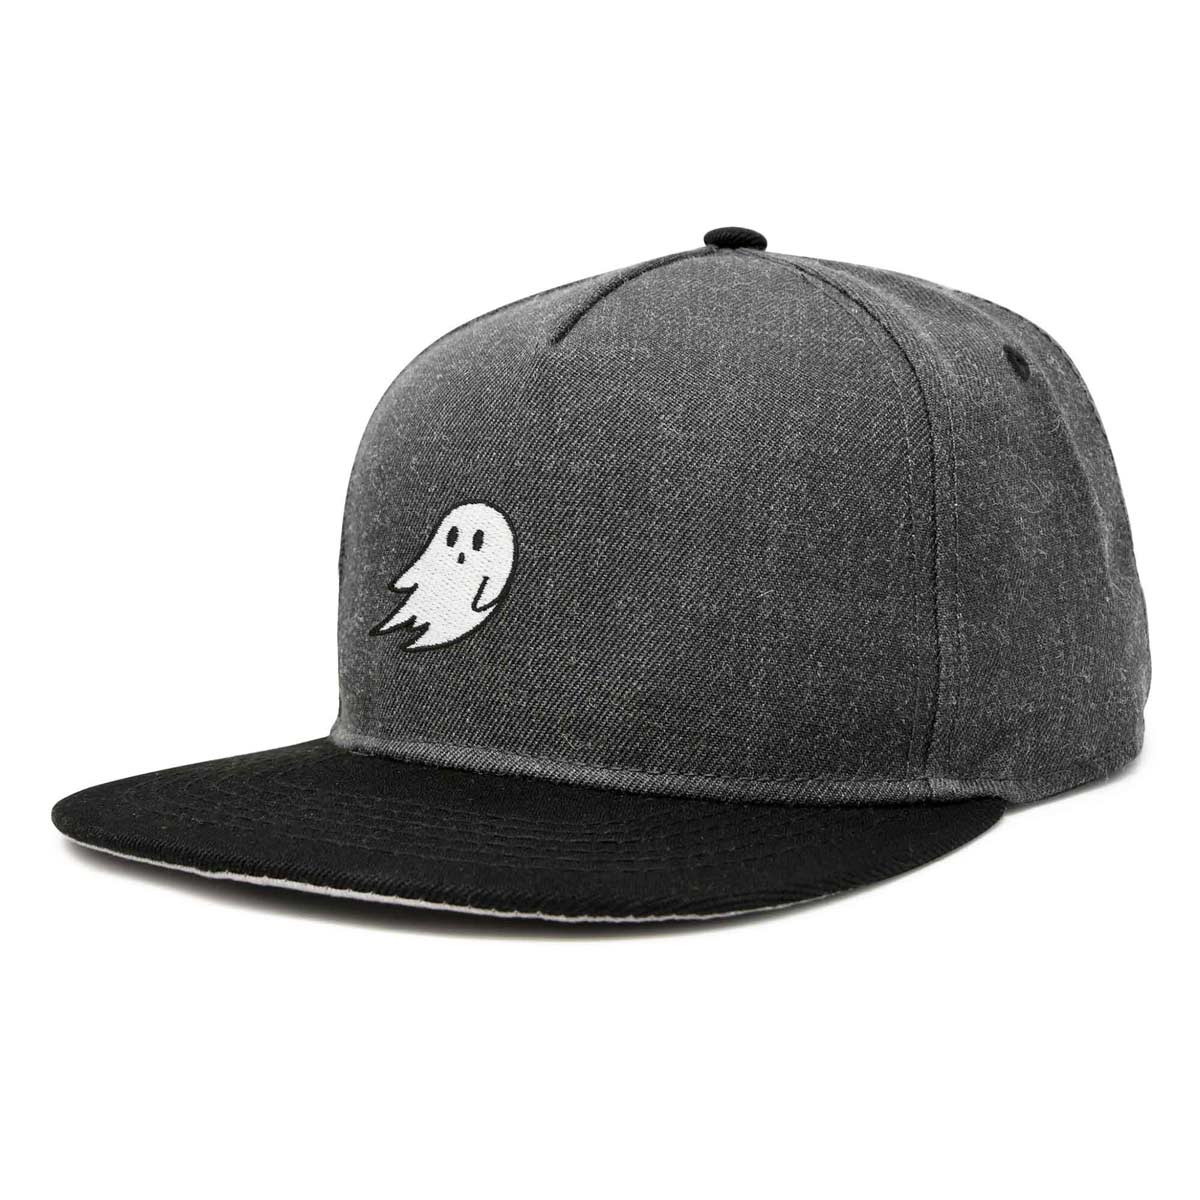 Dalix Ghost Snapback Flat Bill Baseball Hat Embroidered Cap Mens in Dark Gray